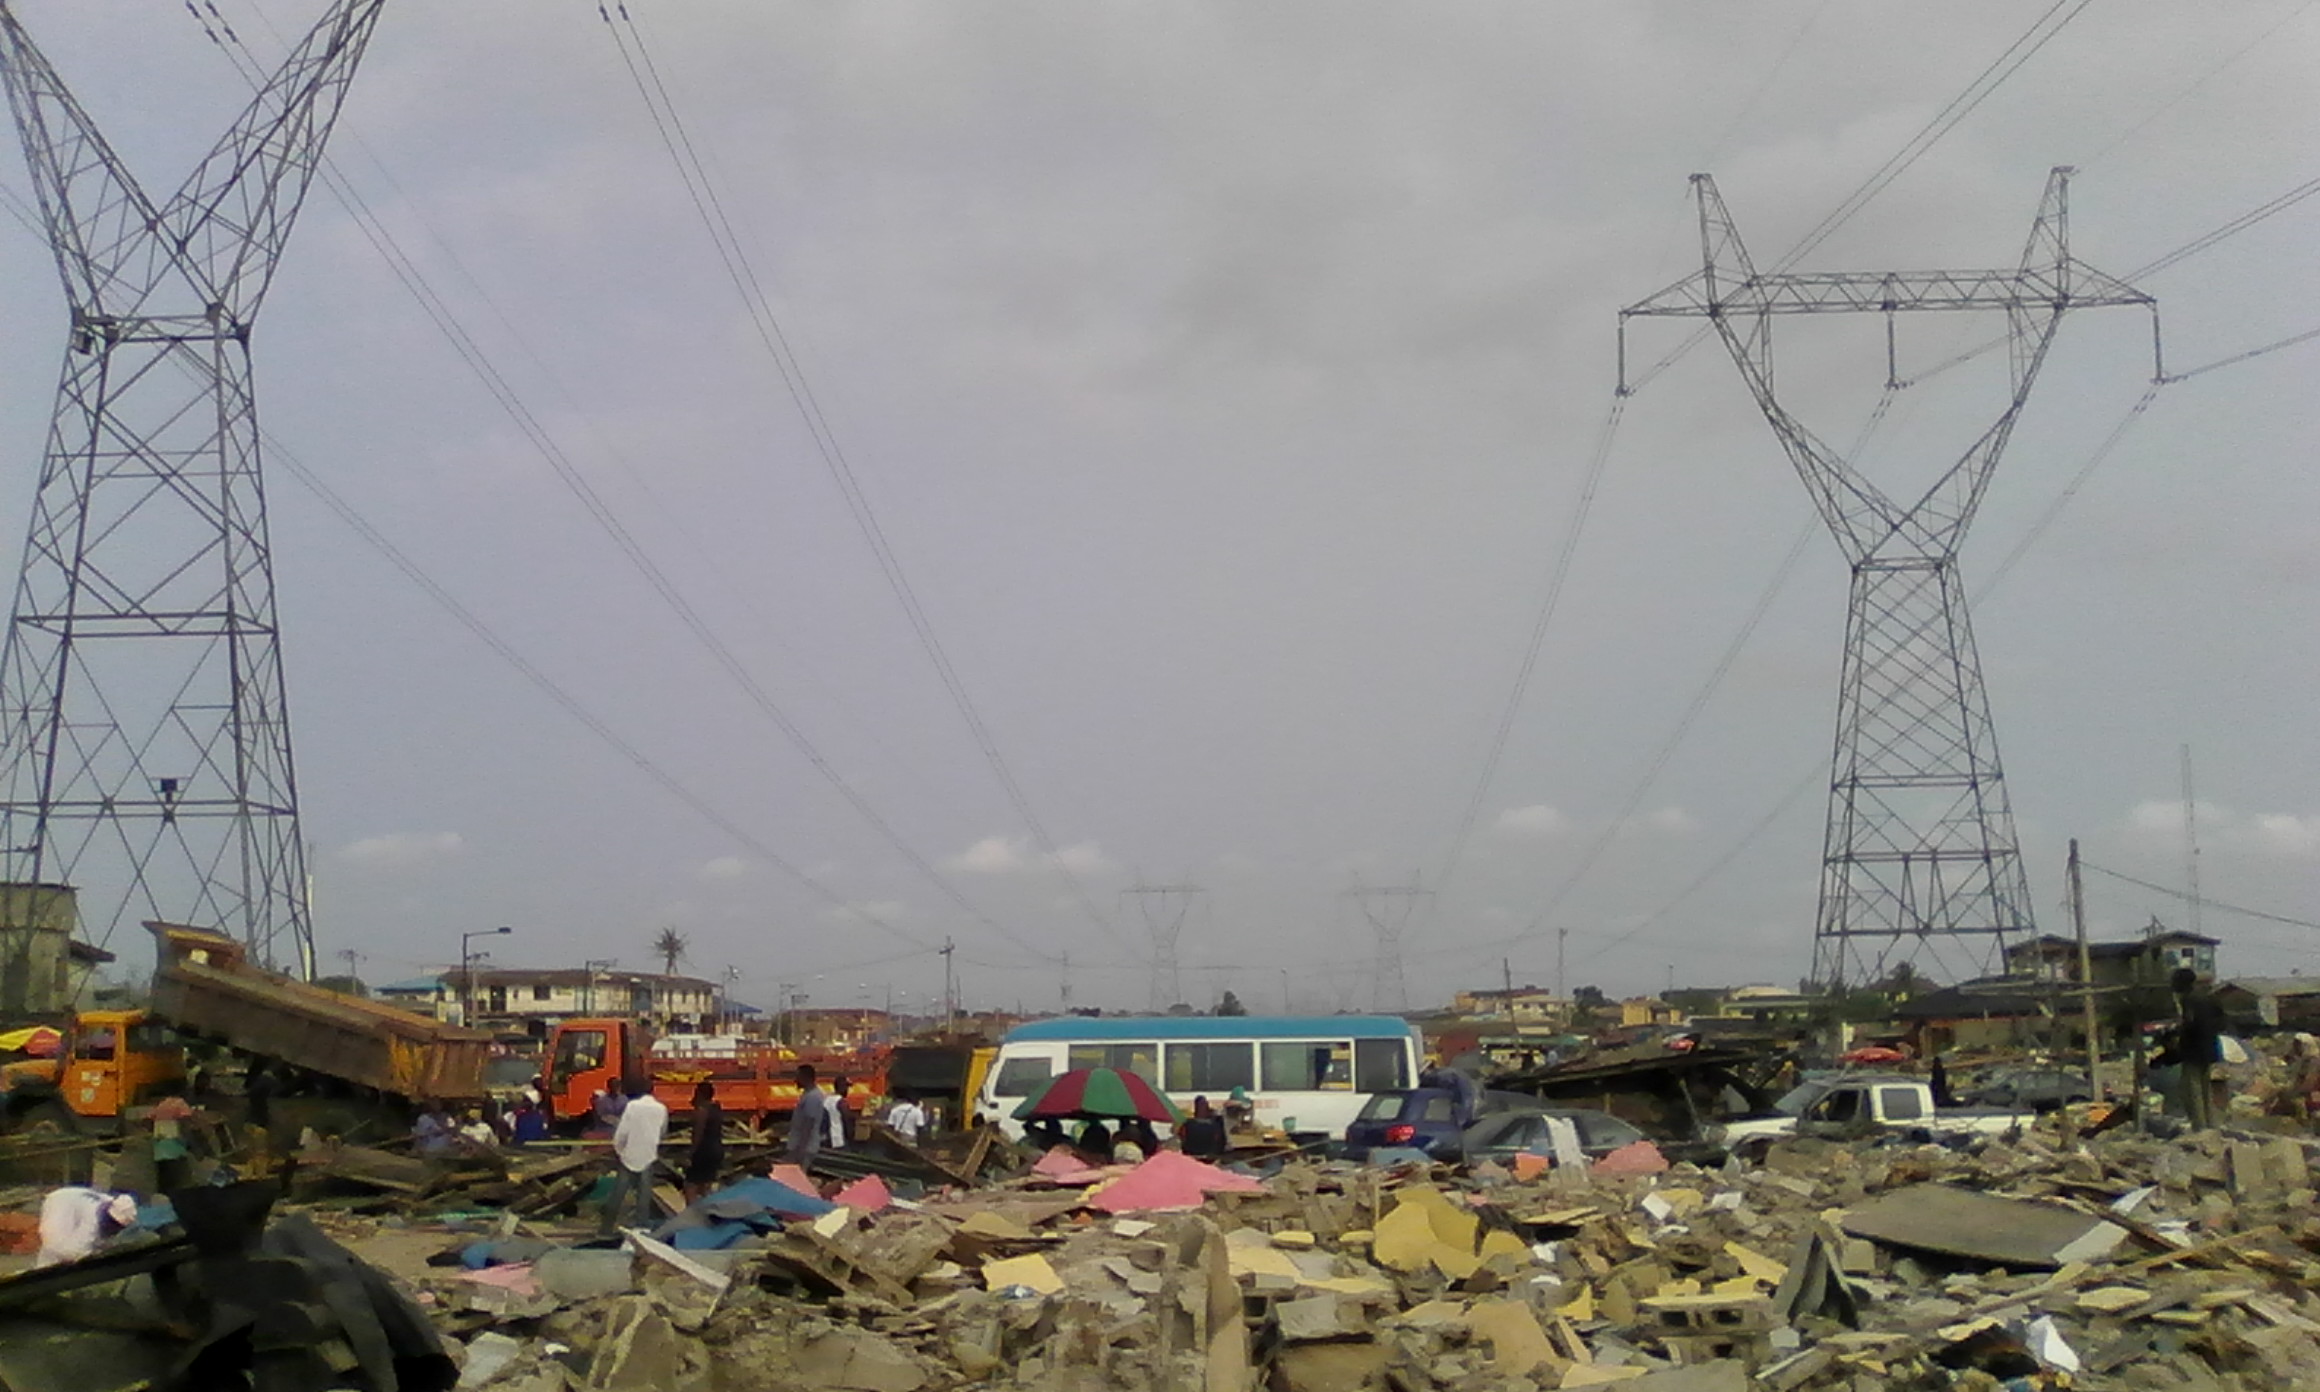 Lagos demolished Structures under power line